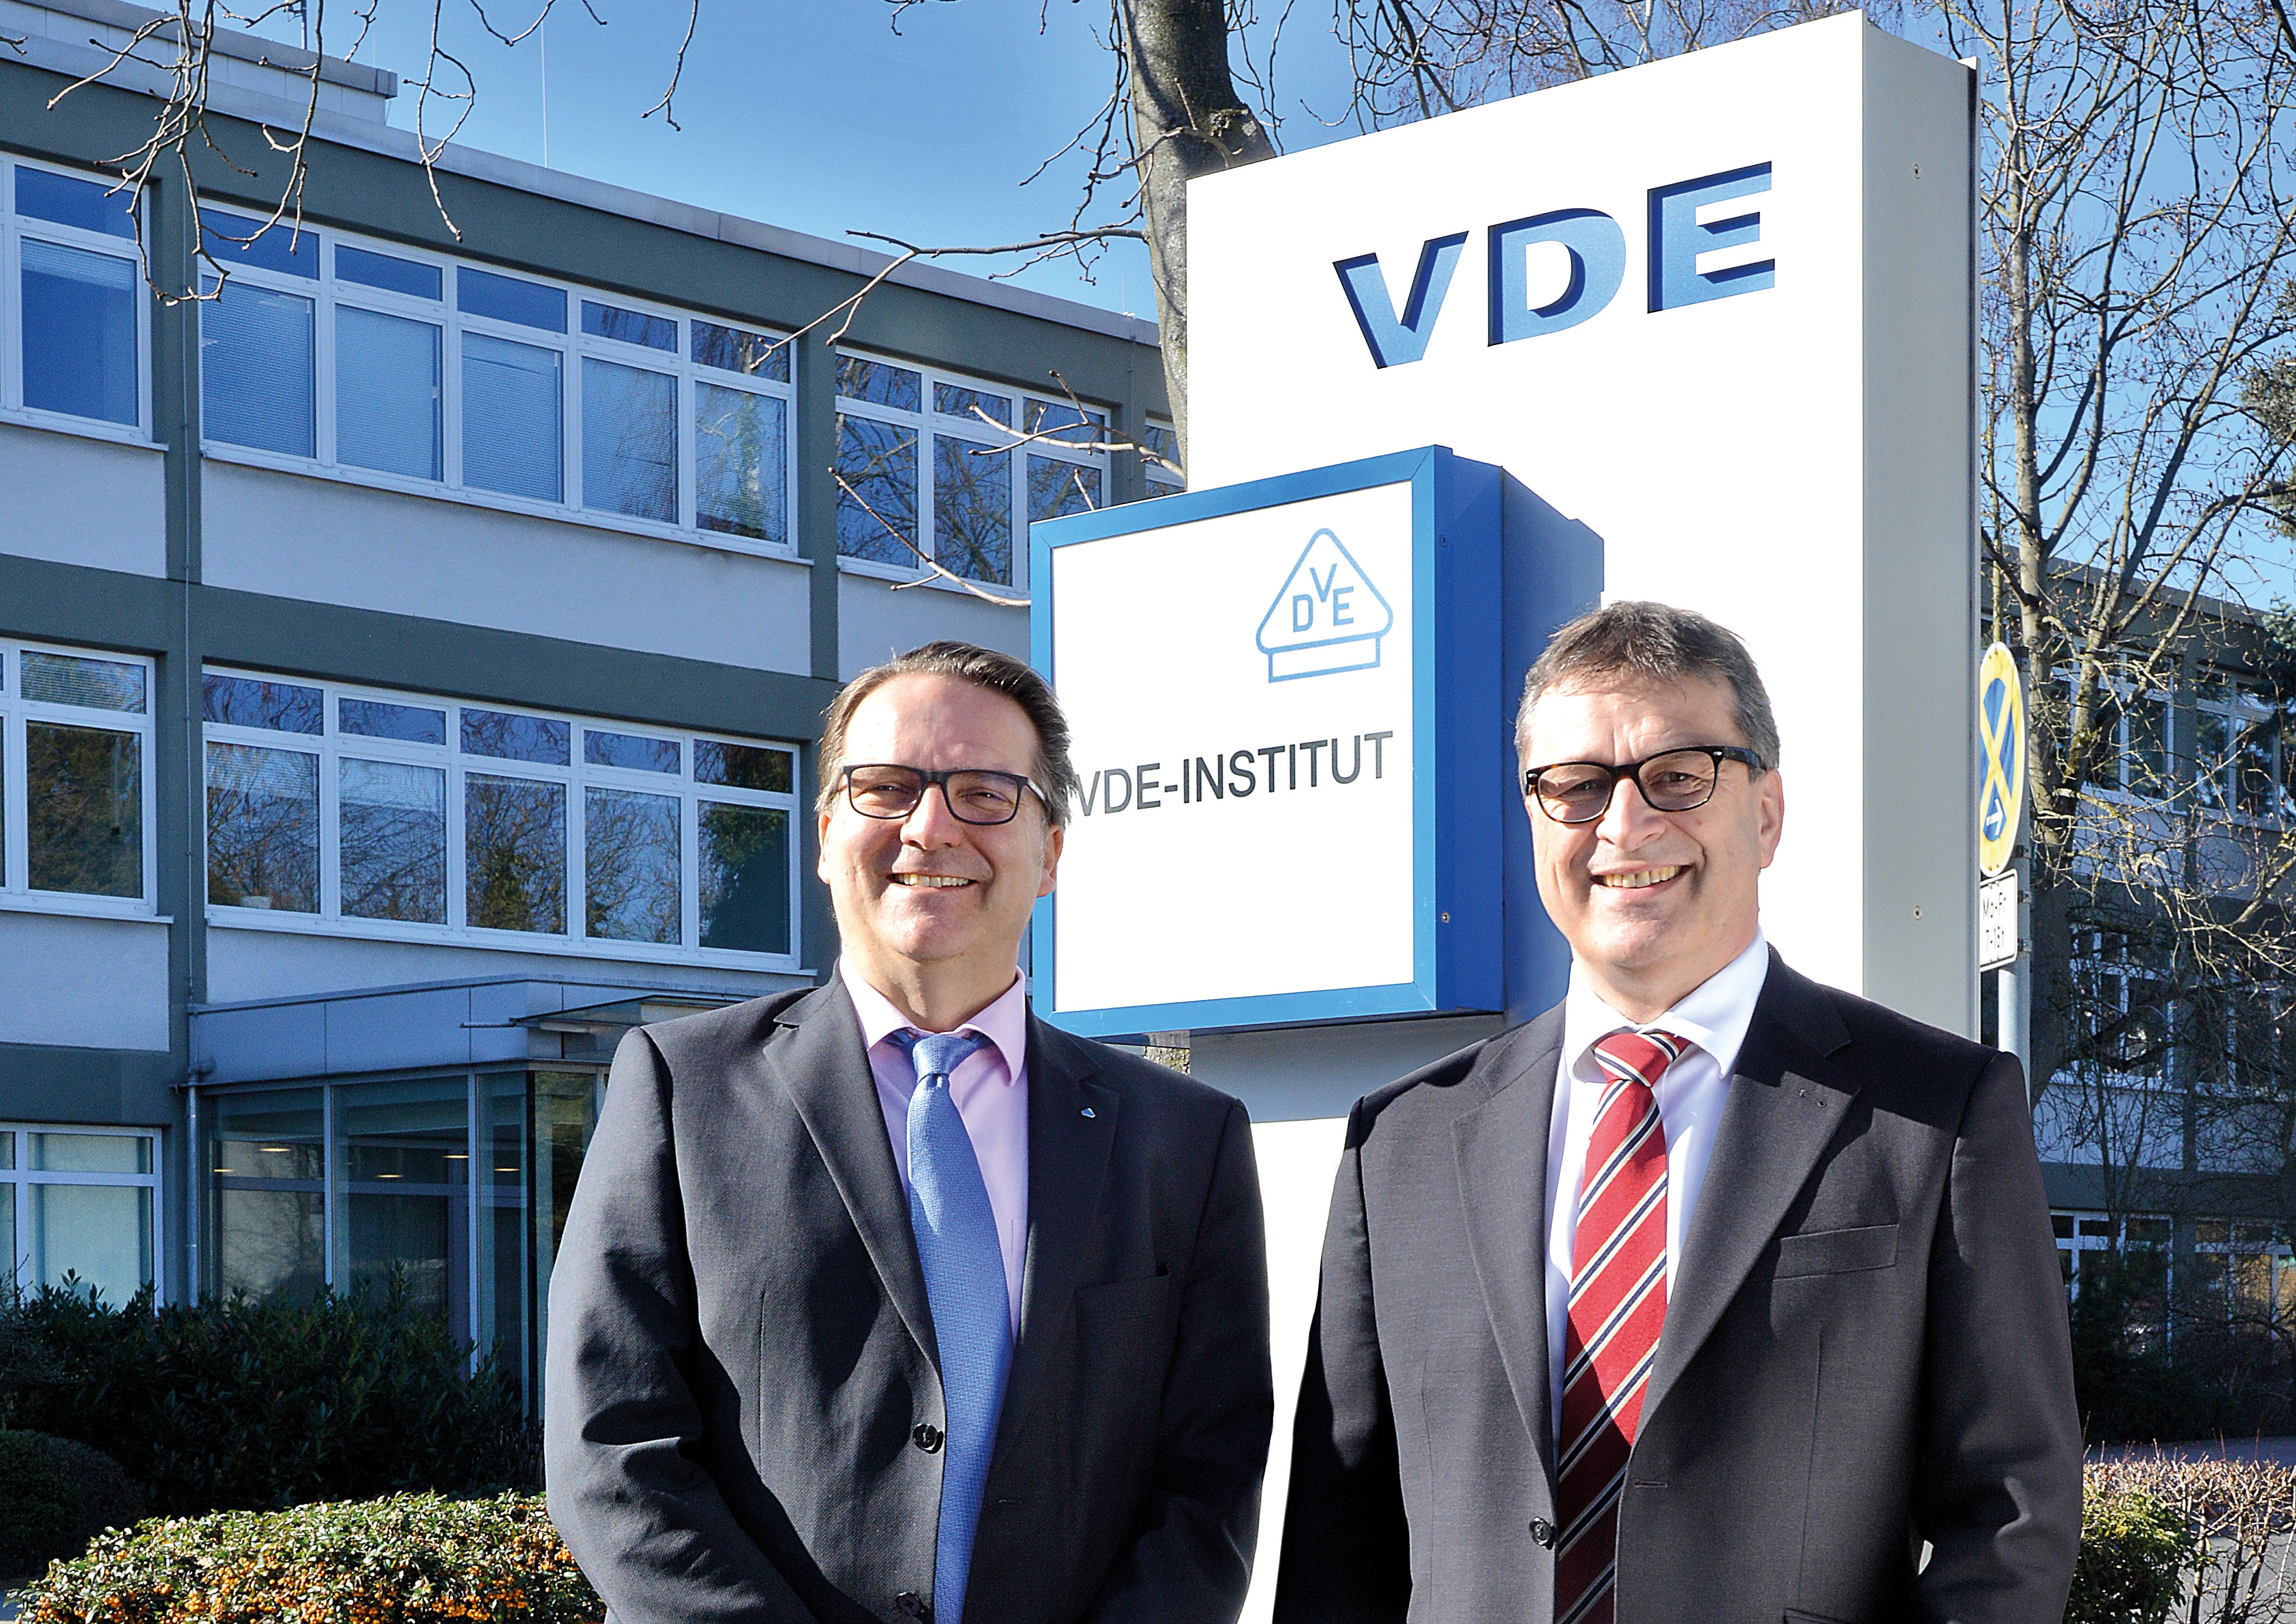 (From left) Sven Öhrke, managing director of VDEGS, and Wolfgang Niedziella, managing director of VDE Testing and Certification Institute